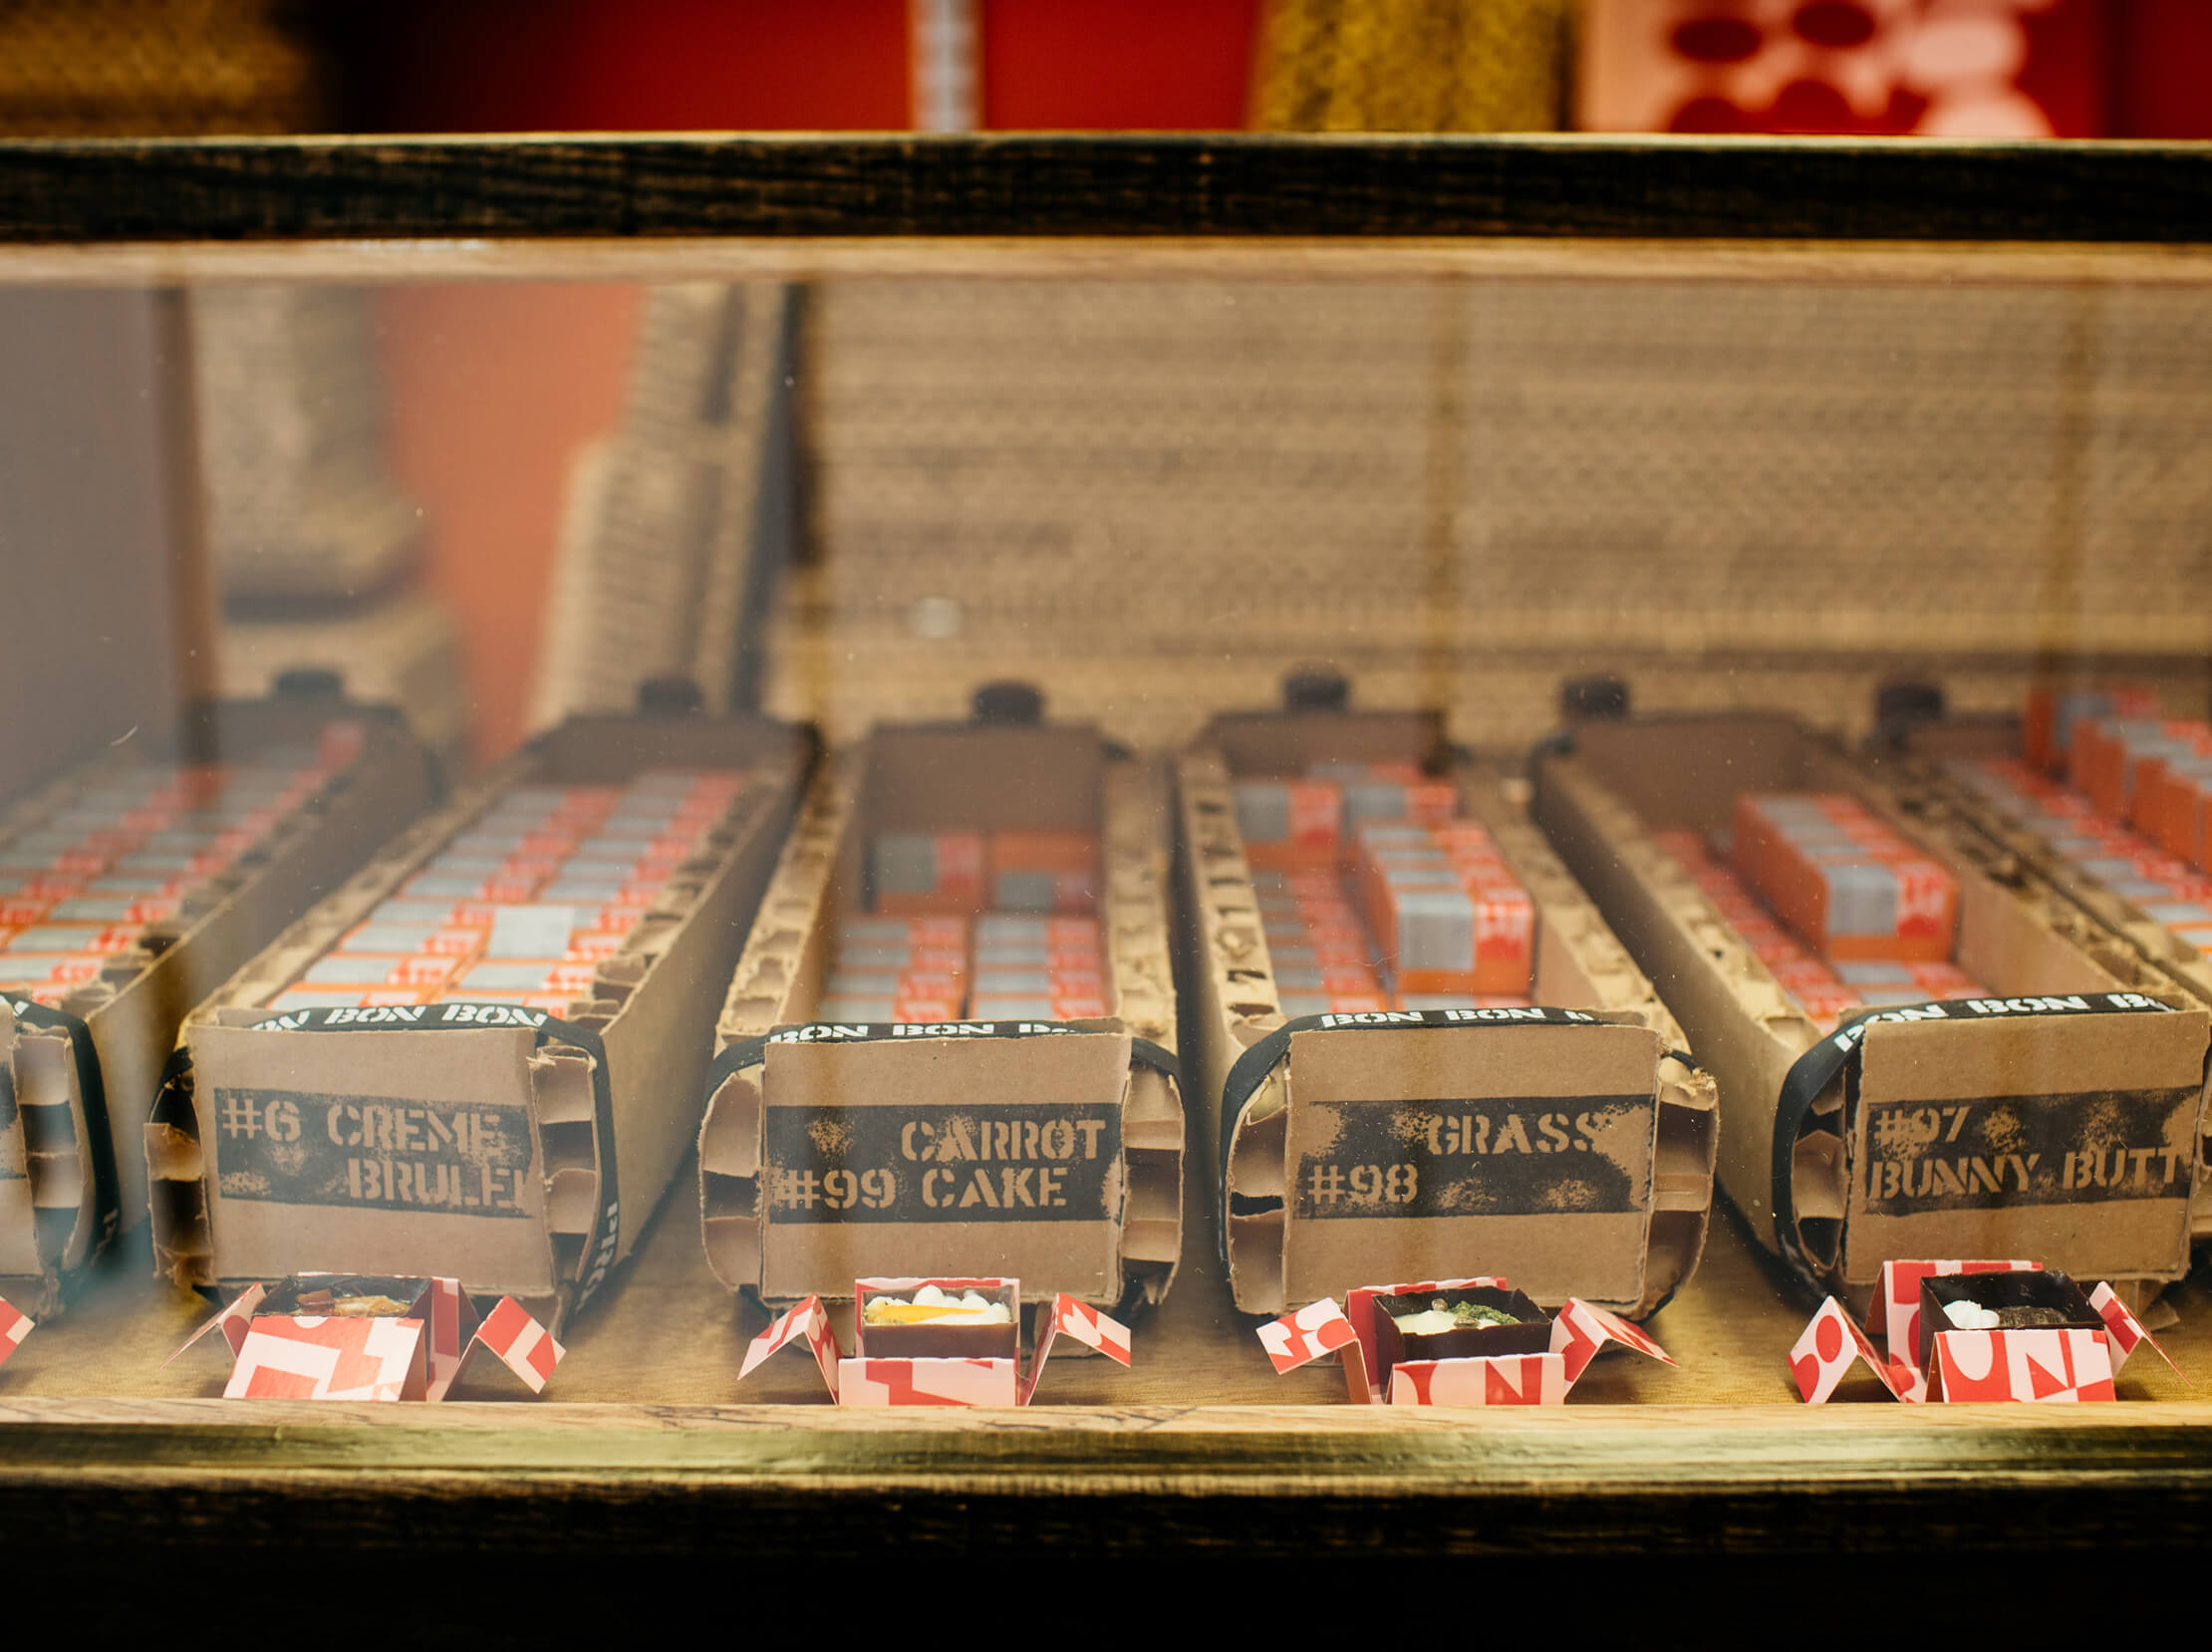 Bon Bon Bon Chocolate Box Packaging In Retail Display